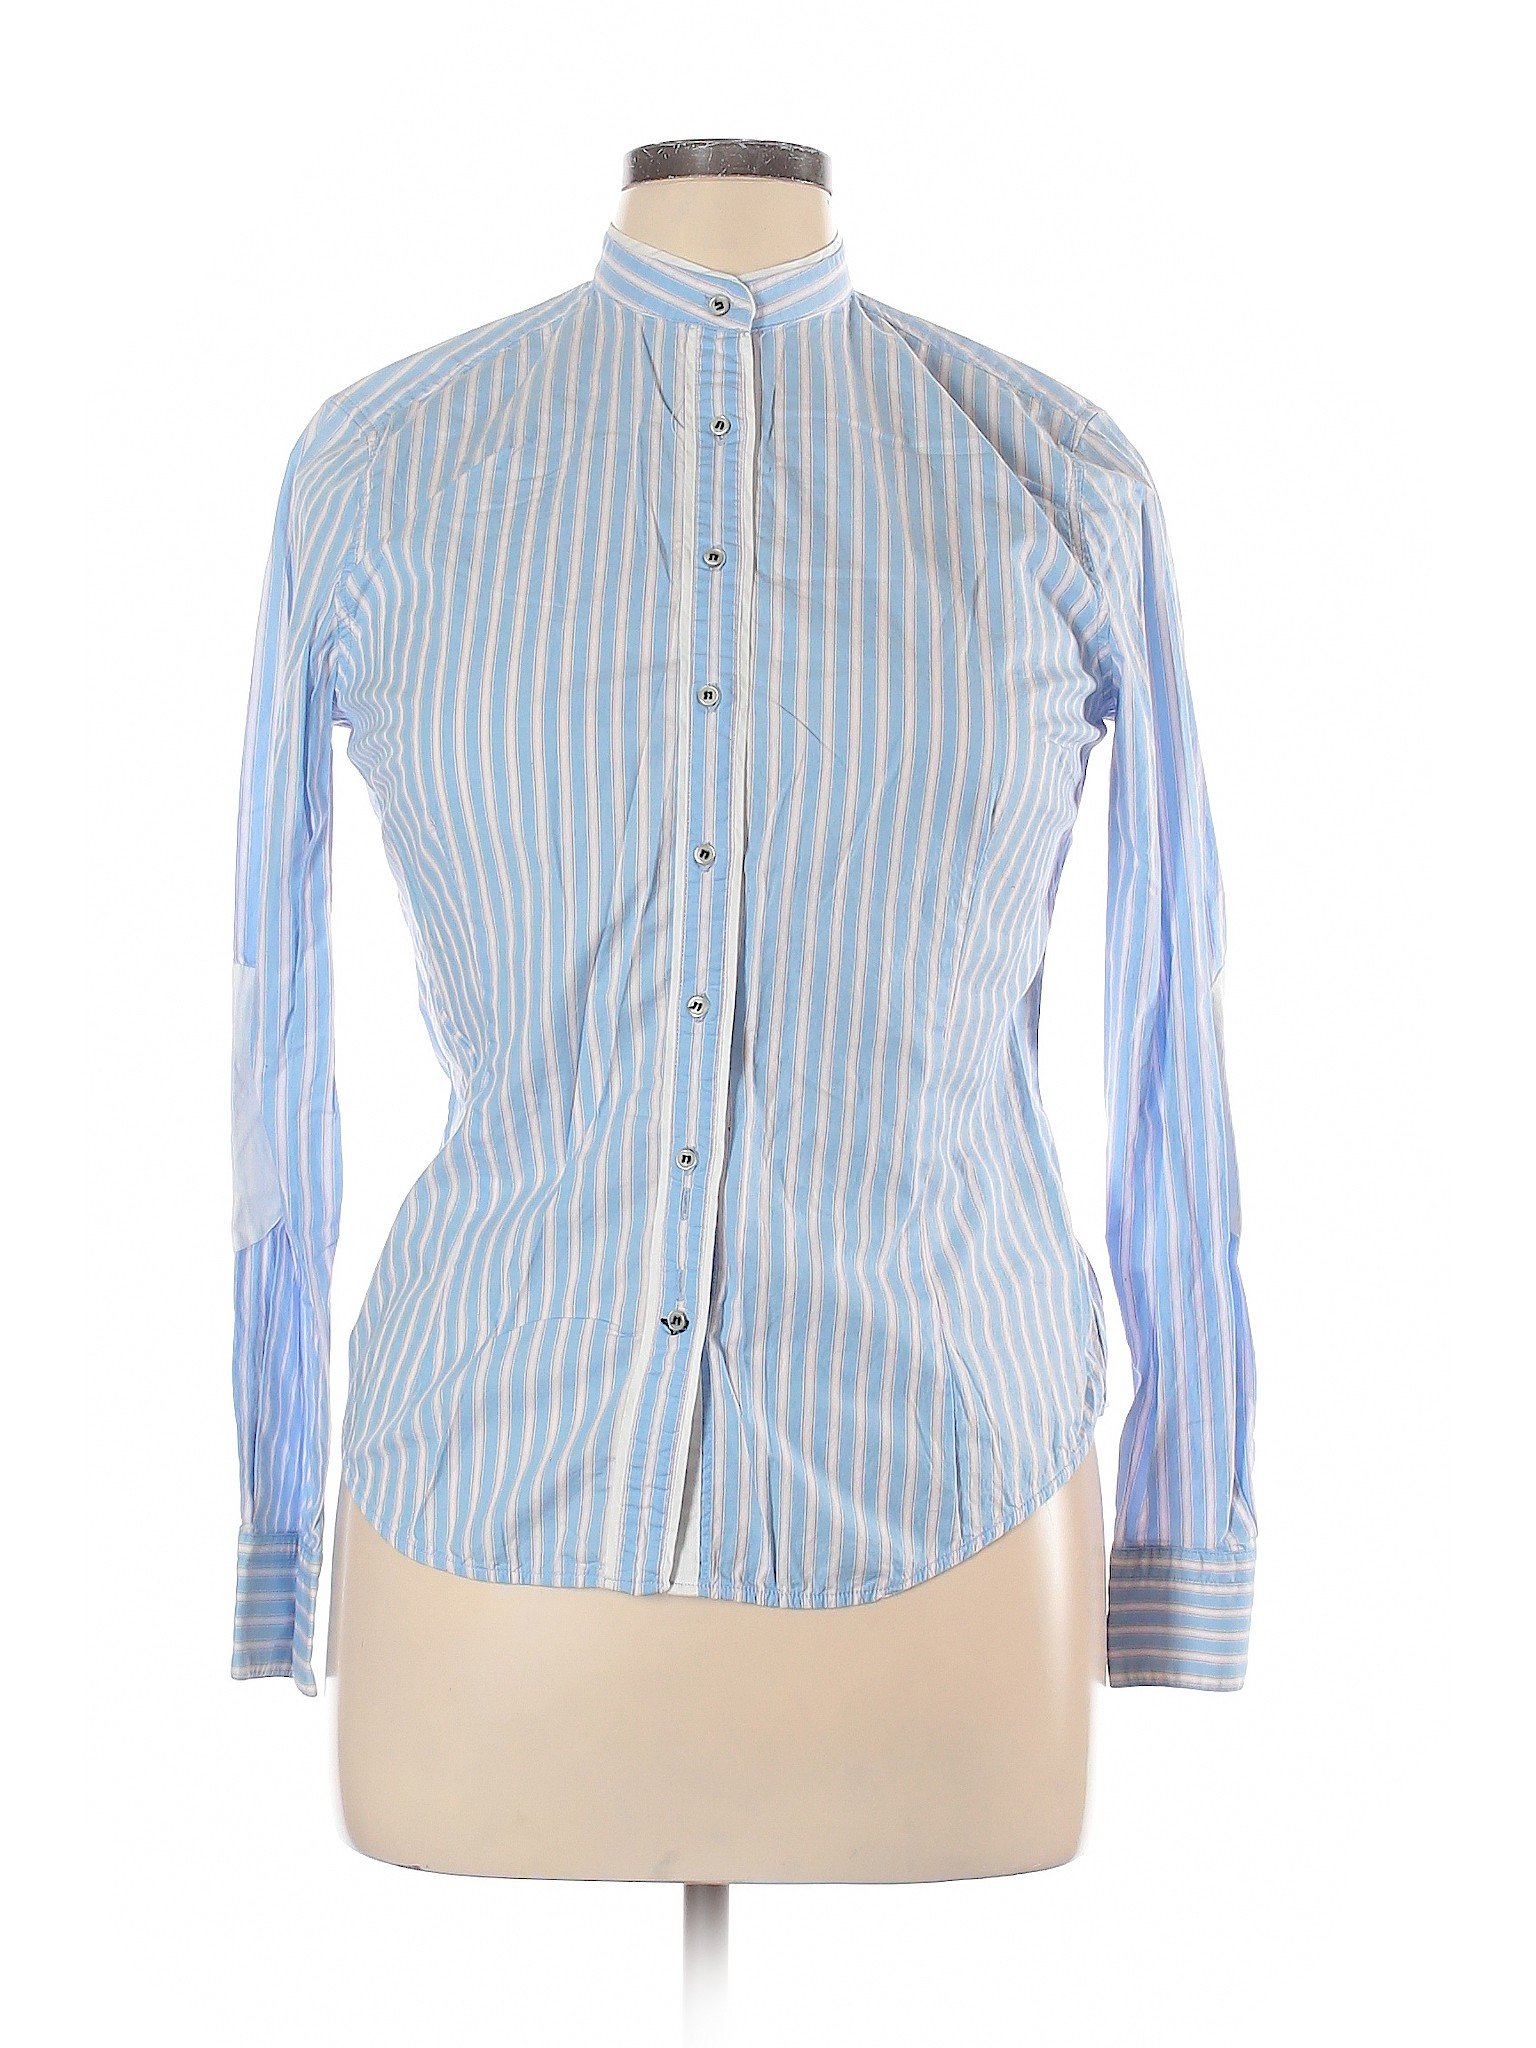 Zara Basic Women Blue Long Sleeve Button-Down Shirt XL | eBay